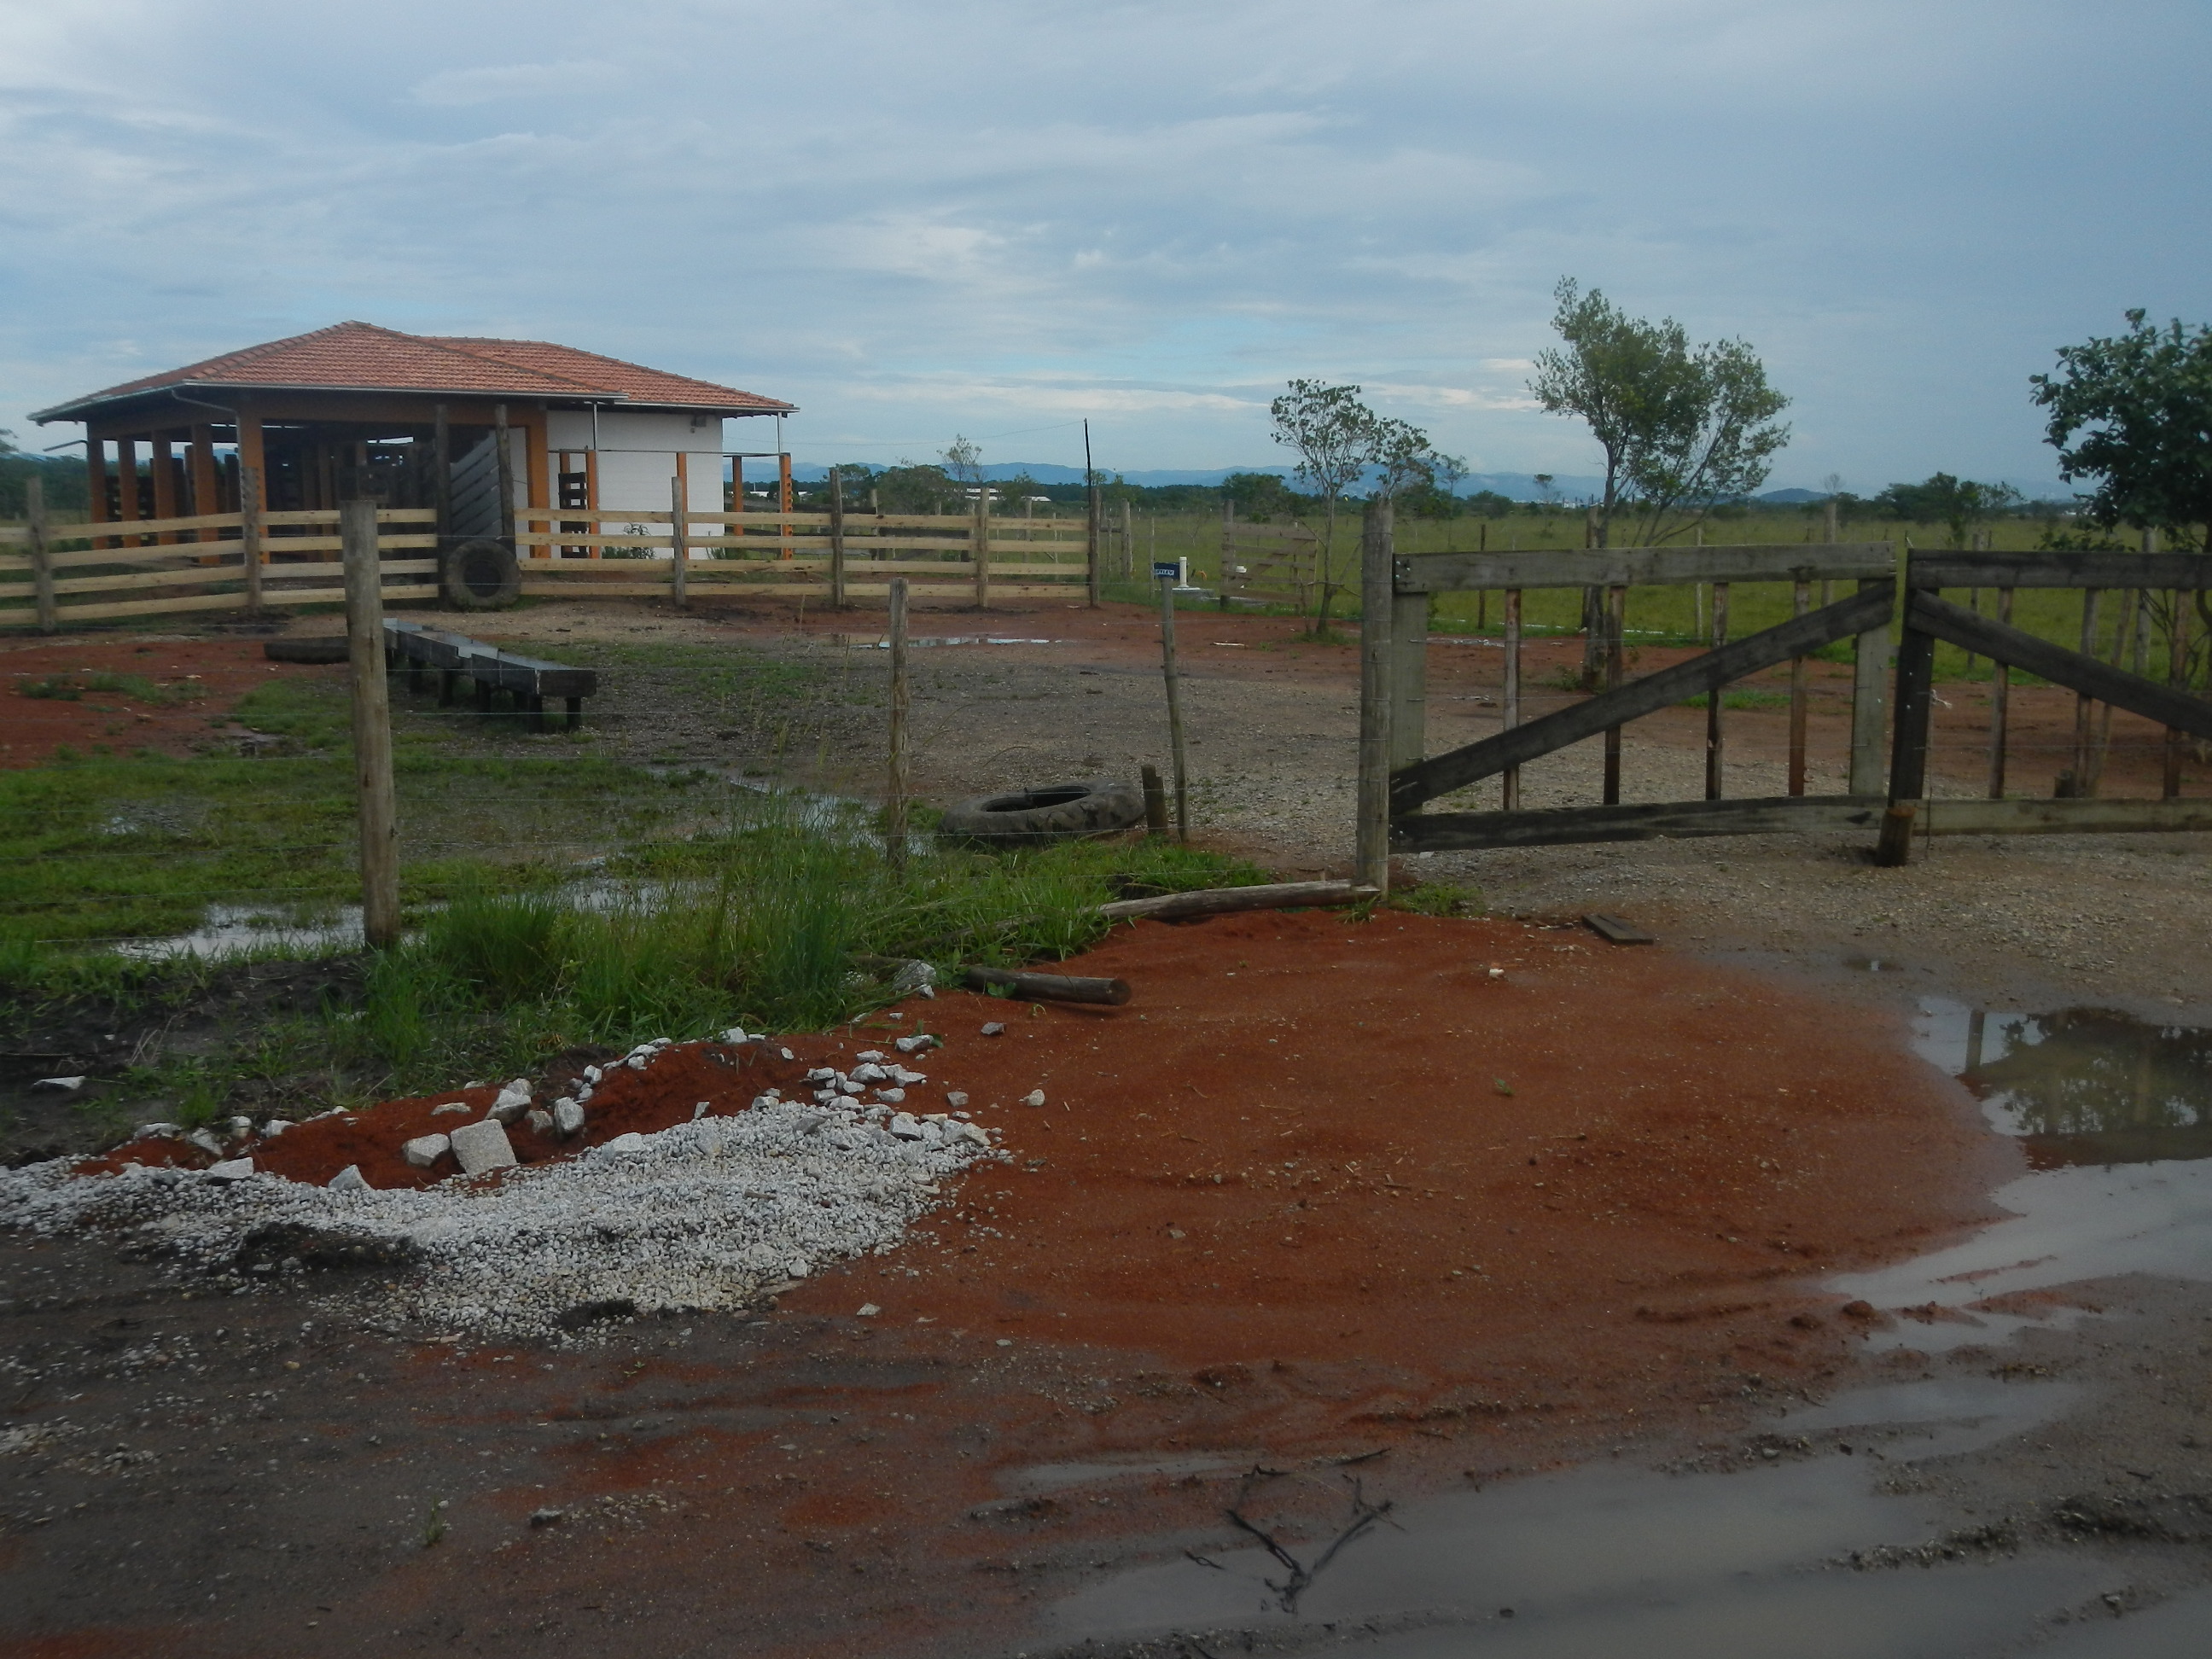 20141229 Fazenda Centro de manejo bovinocultura estrutura 001.jpg